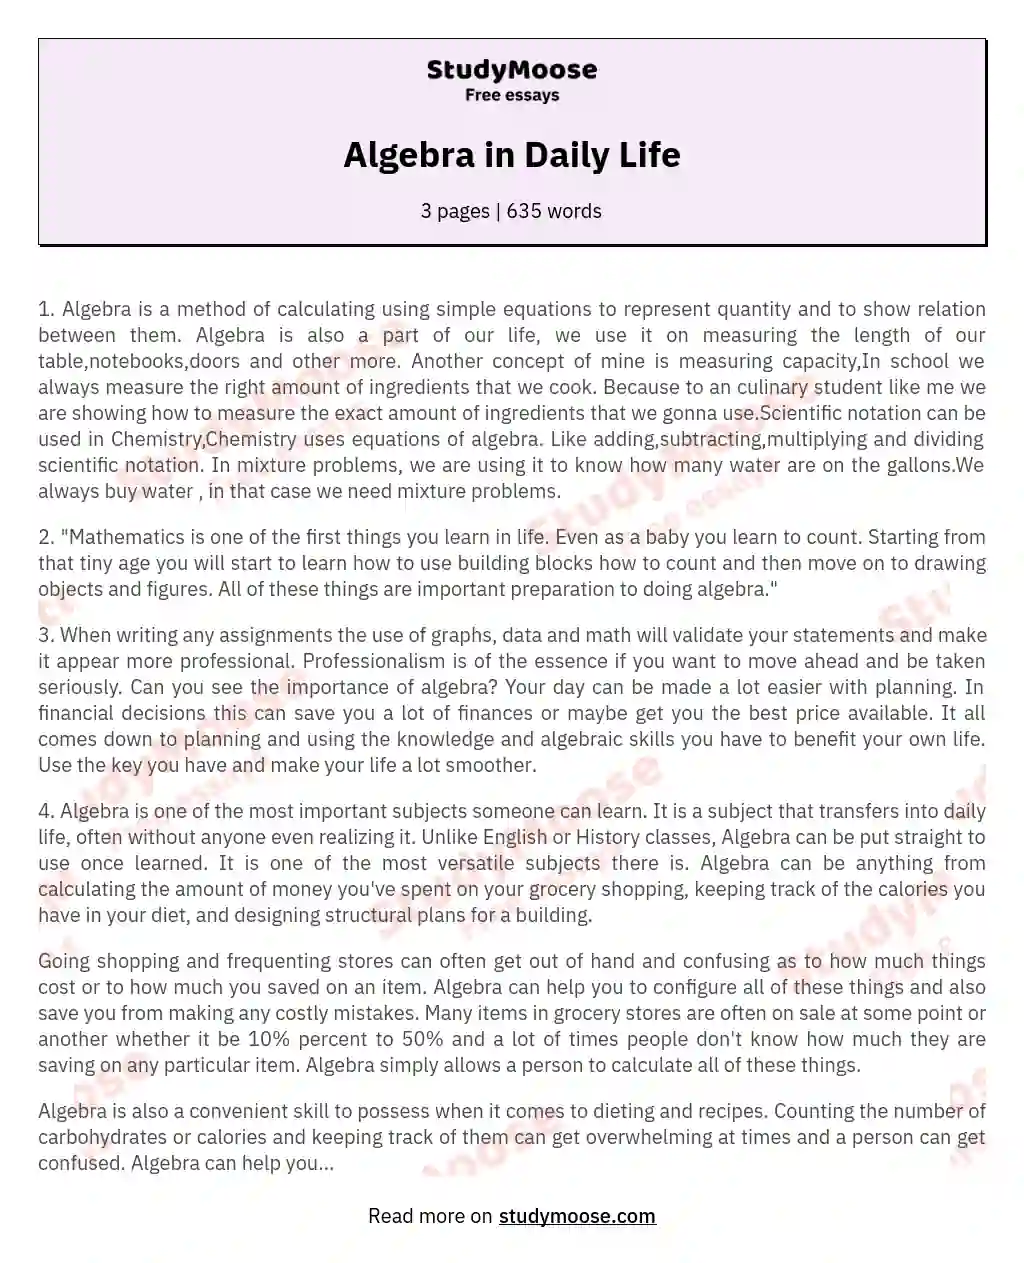 Algebra in Daily Life essay